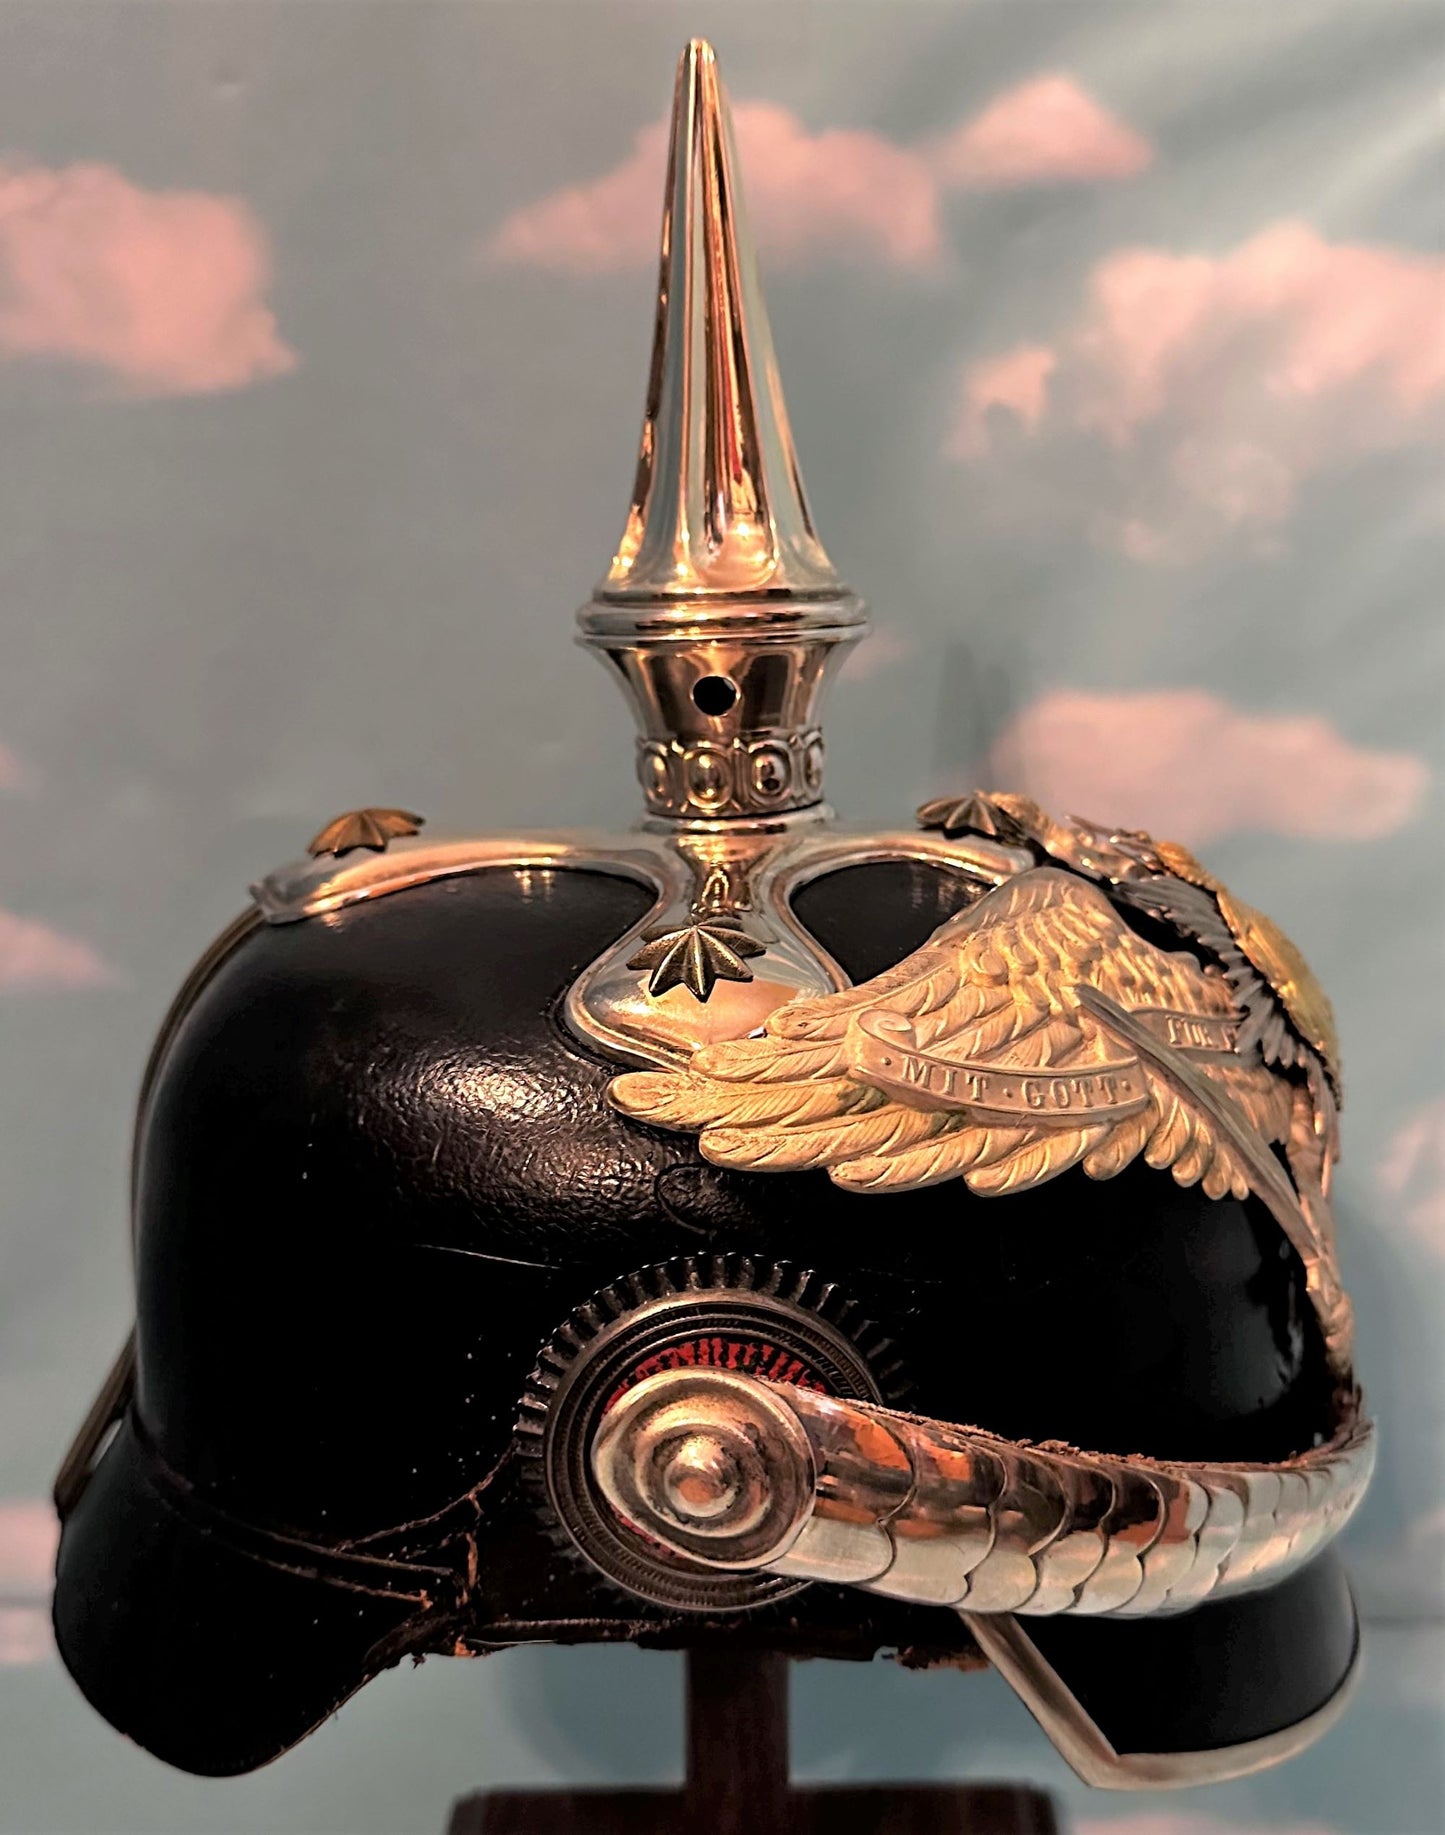 Reuss Pickelhaube / Spiked Helmet Flügel Adjutant to the Younger Reuss prince - Derrittmeister Militaria Group